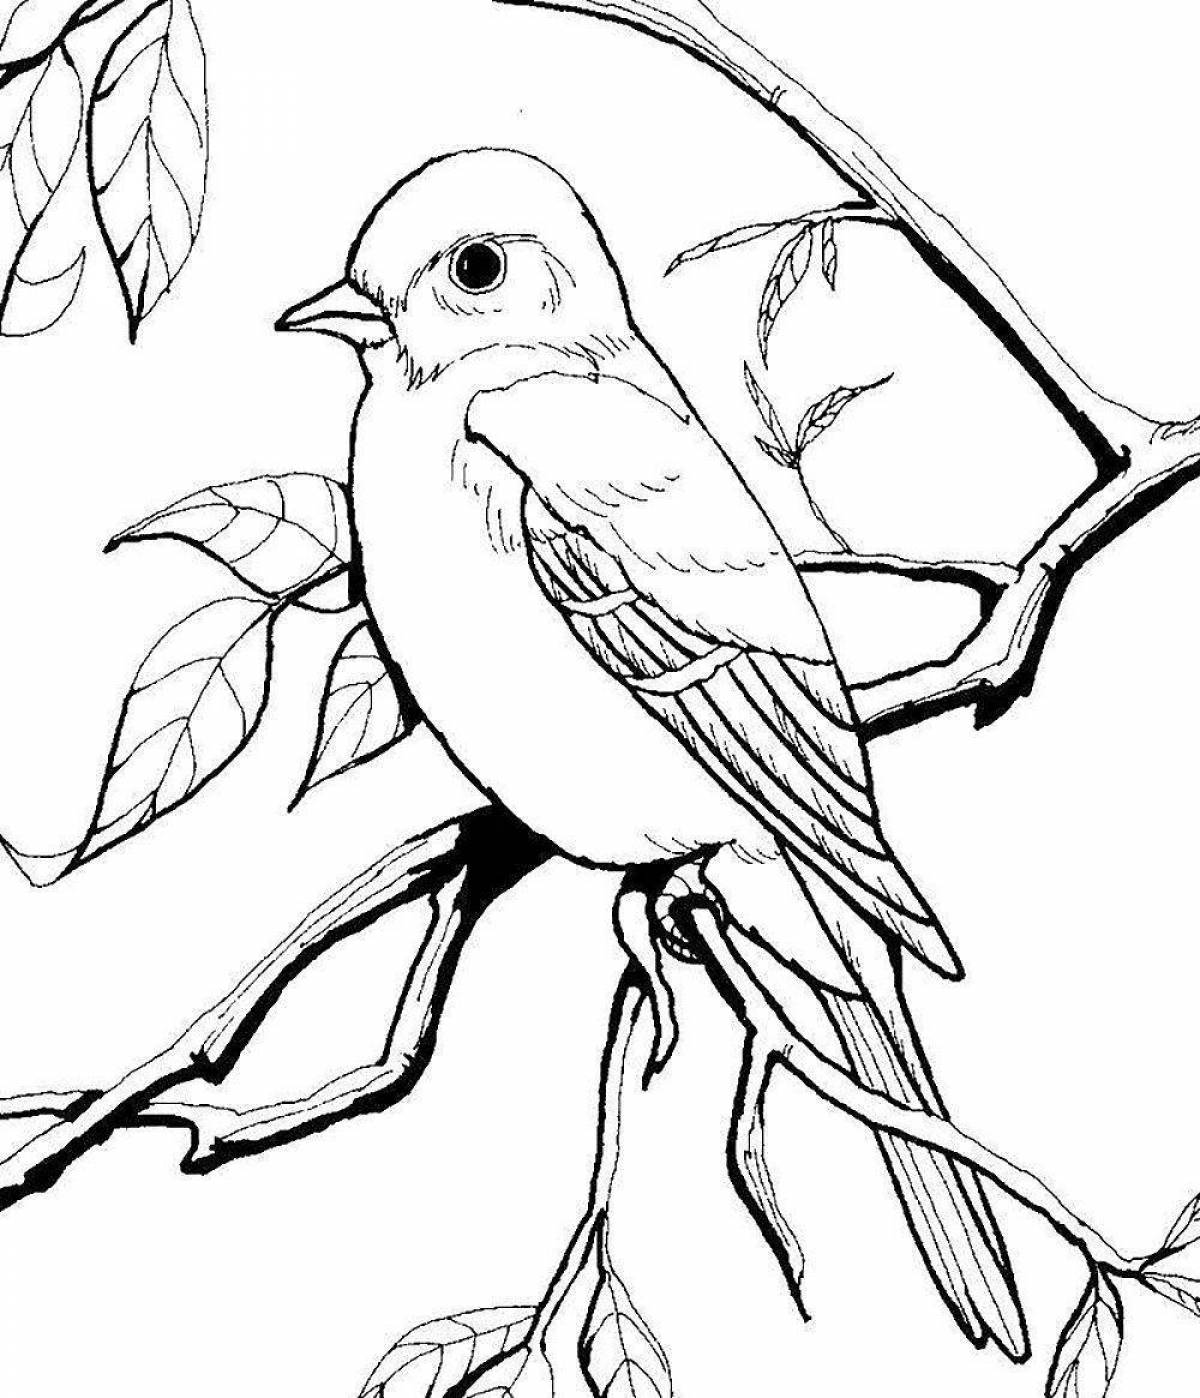 Beautiful coloring drawing of a bird